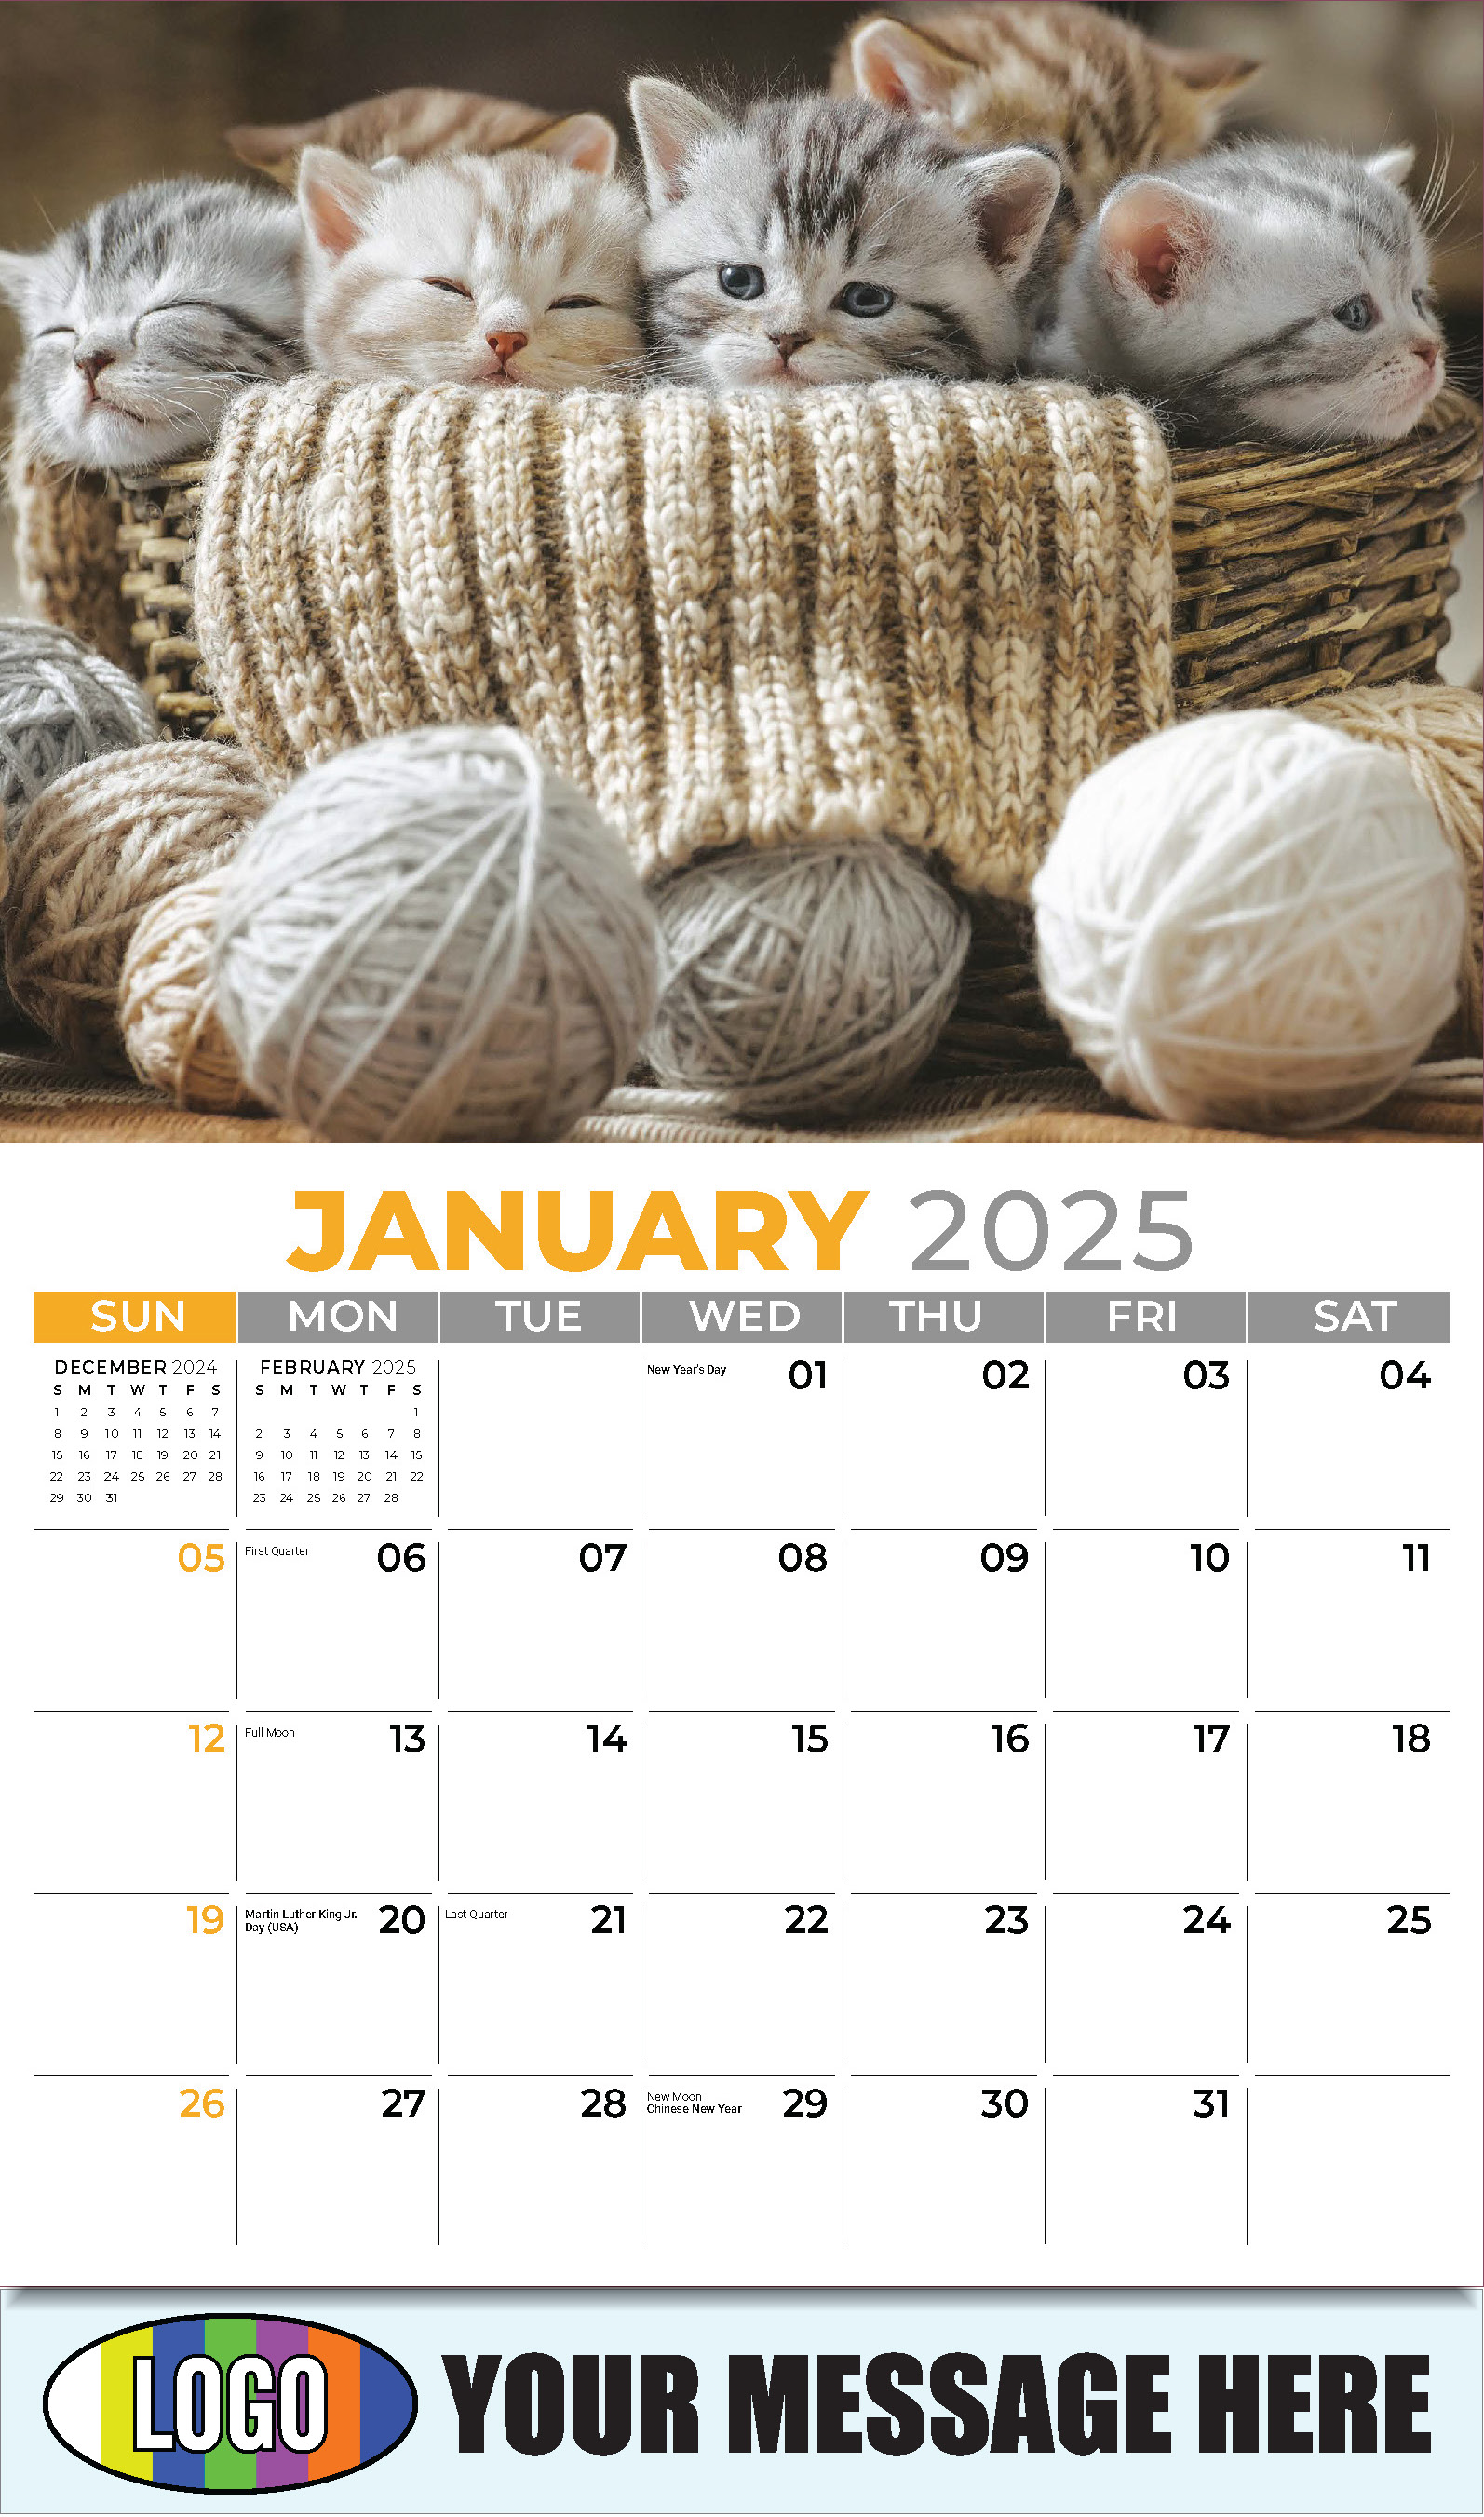 Kittens 2025 Business Promo Wall Calendar - January